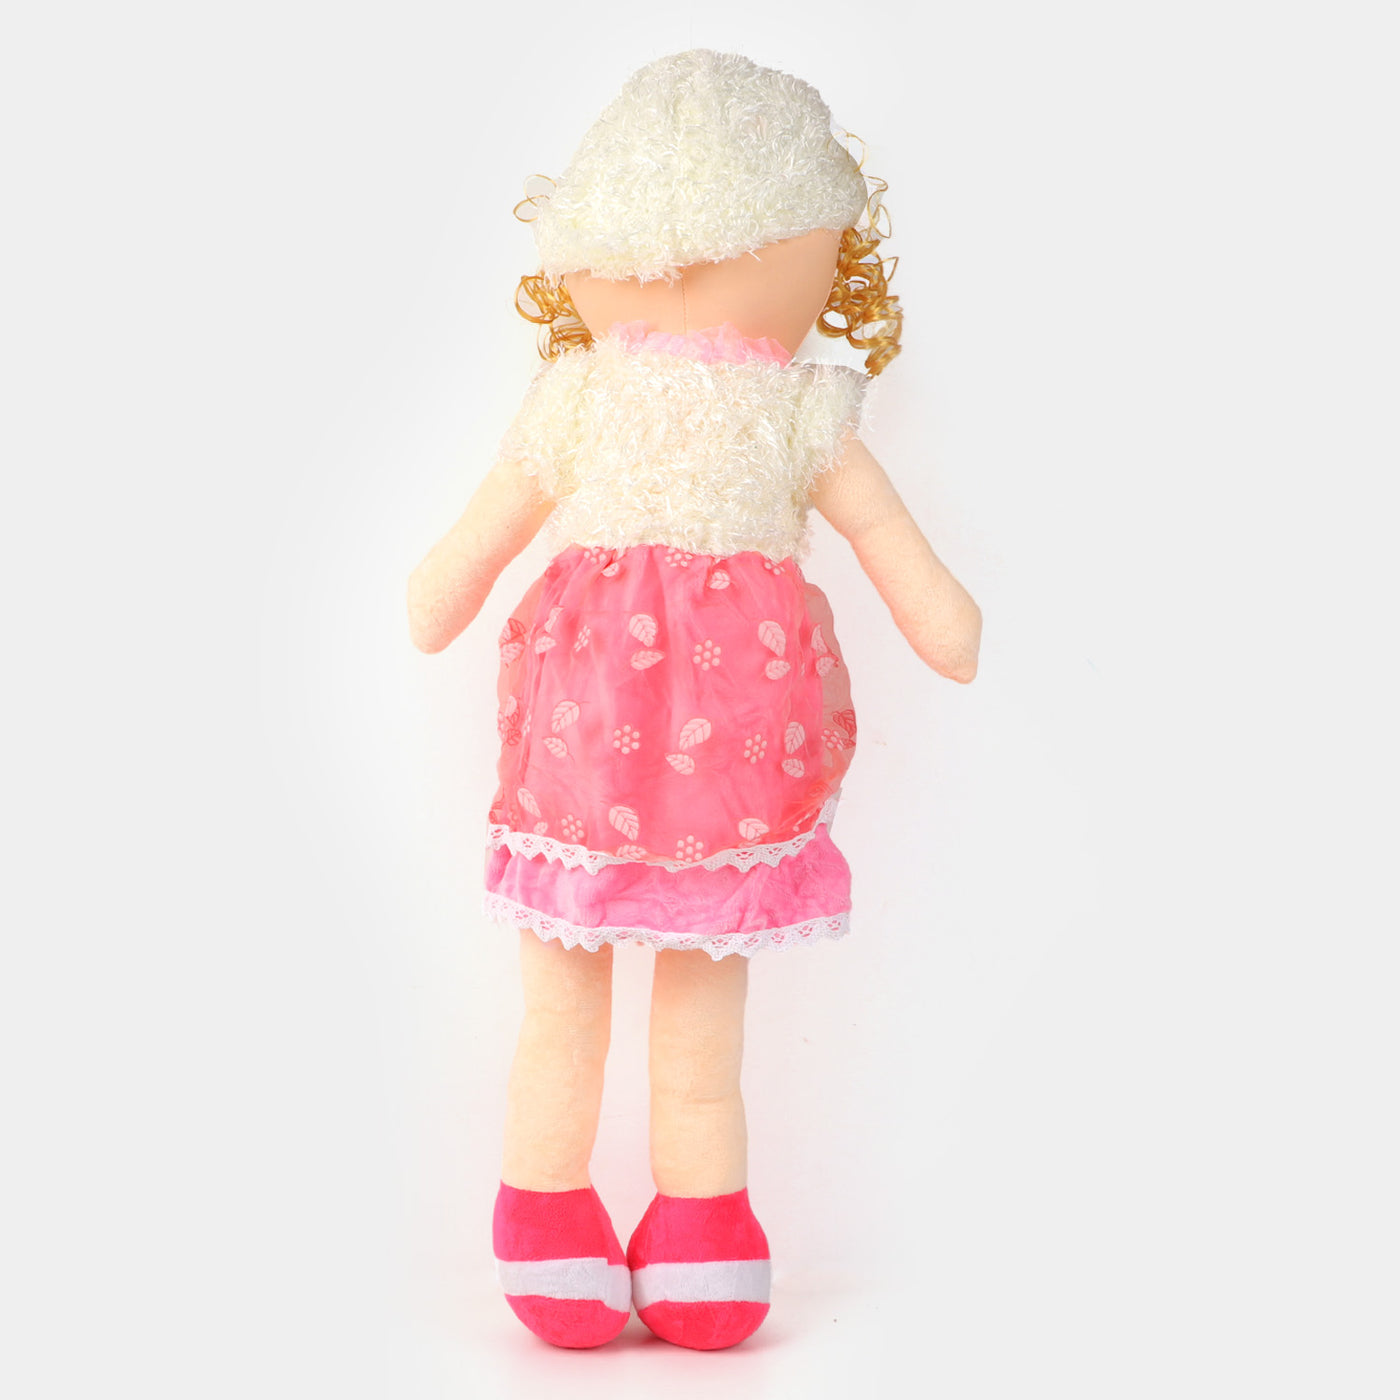 Super Soft Stuffed Doll For Kids